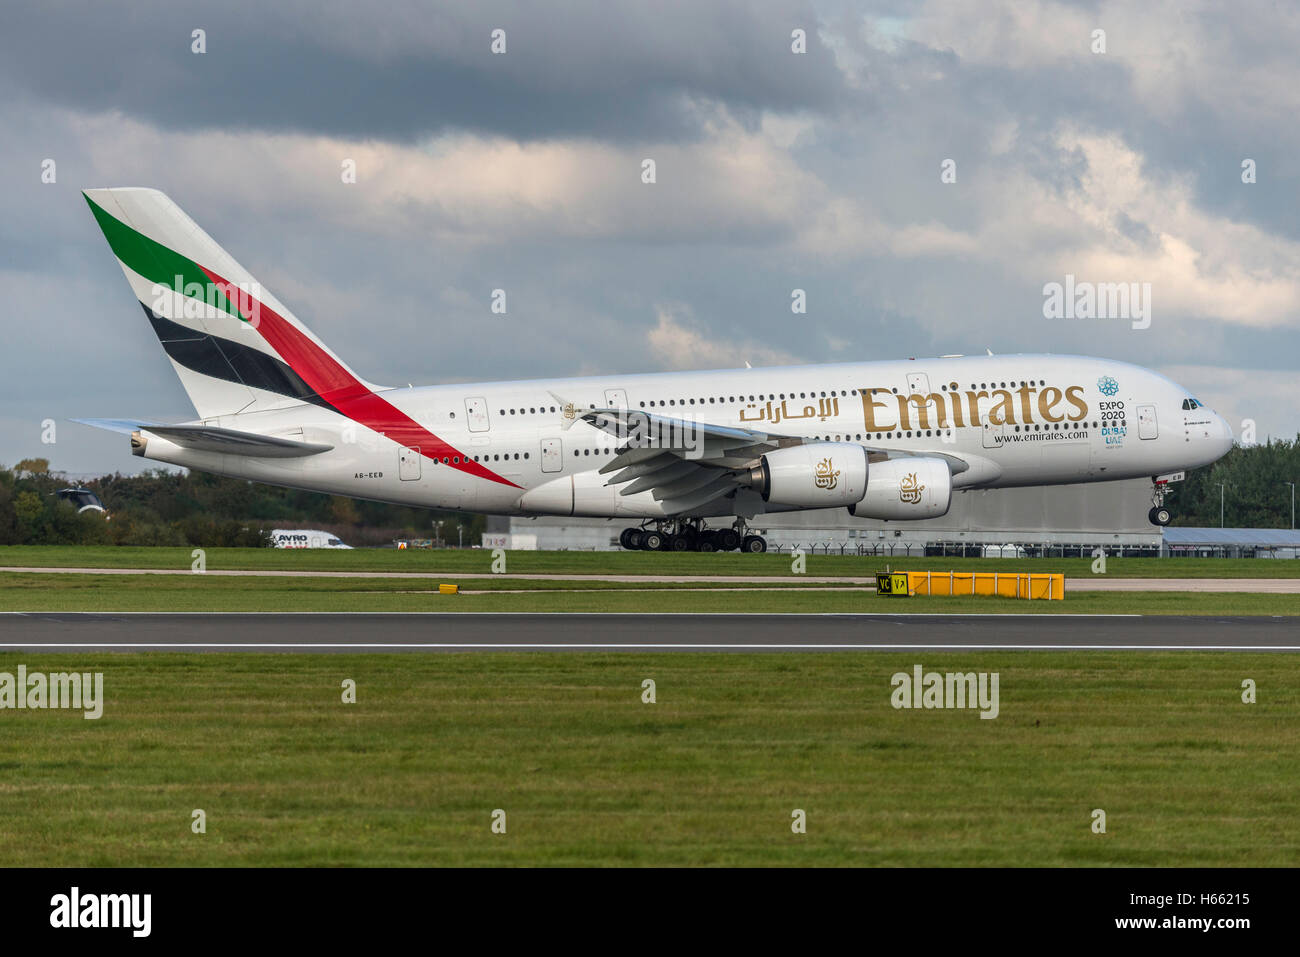 A6-EEB Emirates Airbus A380-861 Expo 2020 Dubi VAE Manchester Flughafen England.Uk. Anreise. Landung. Stockfoto